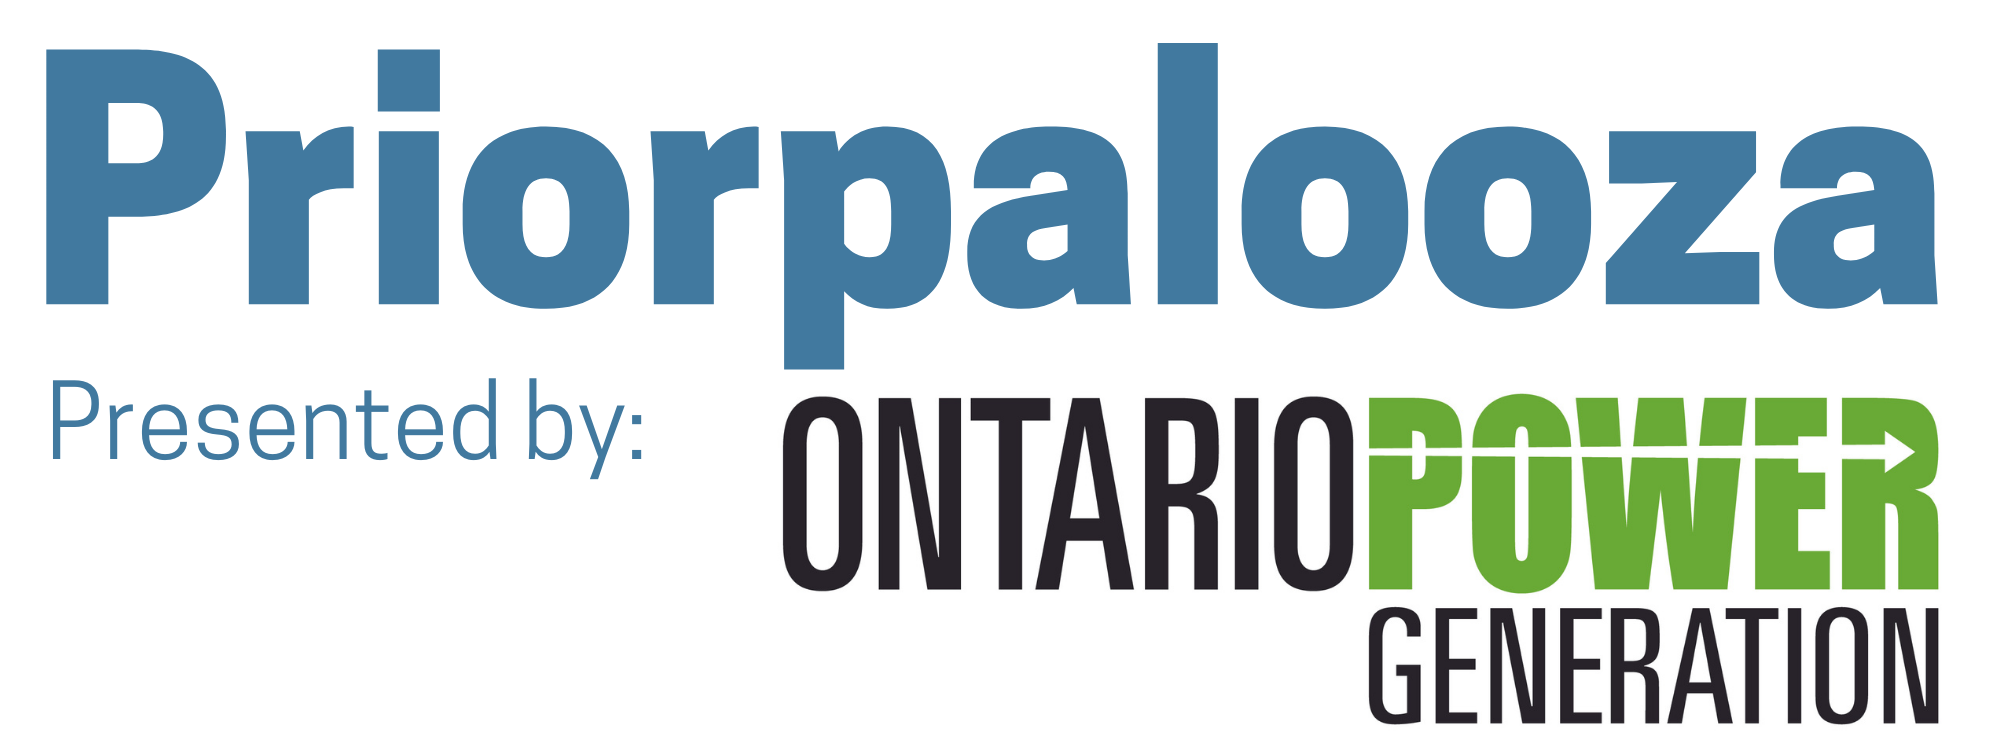 Priorpalooza presented by Ontario Power Generation